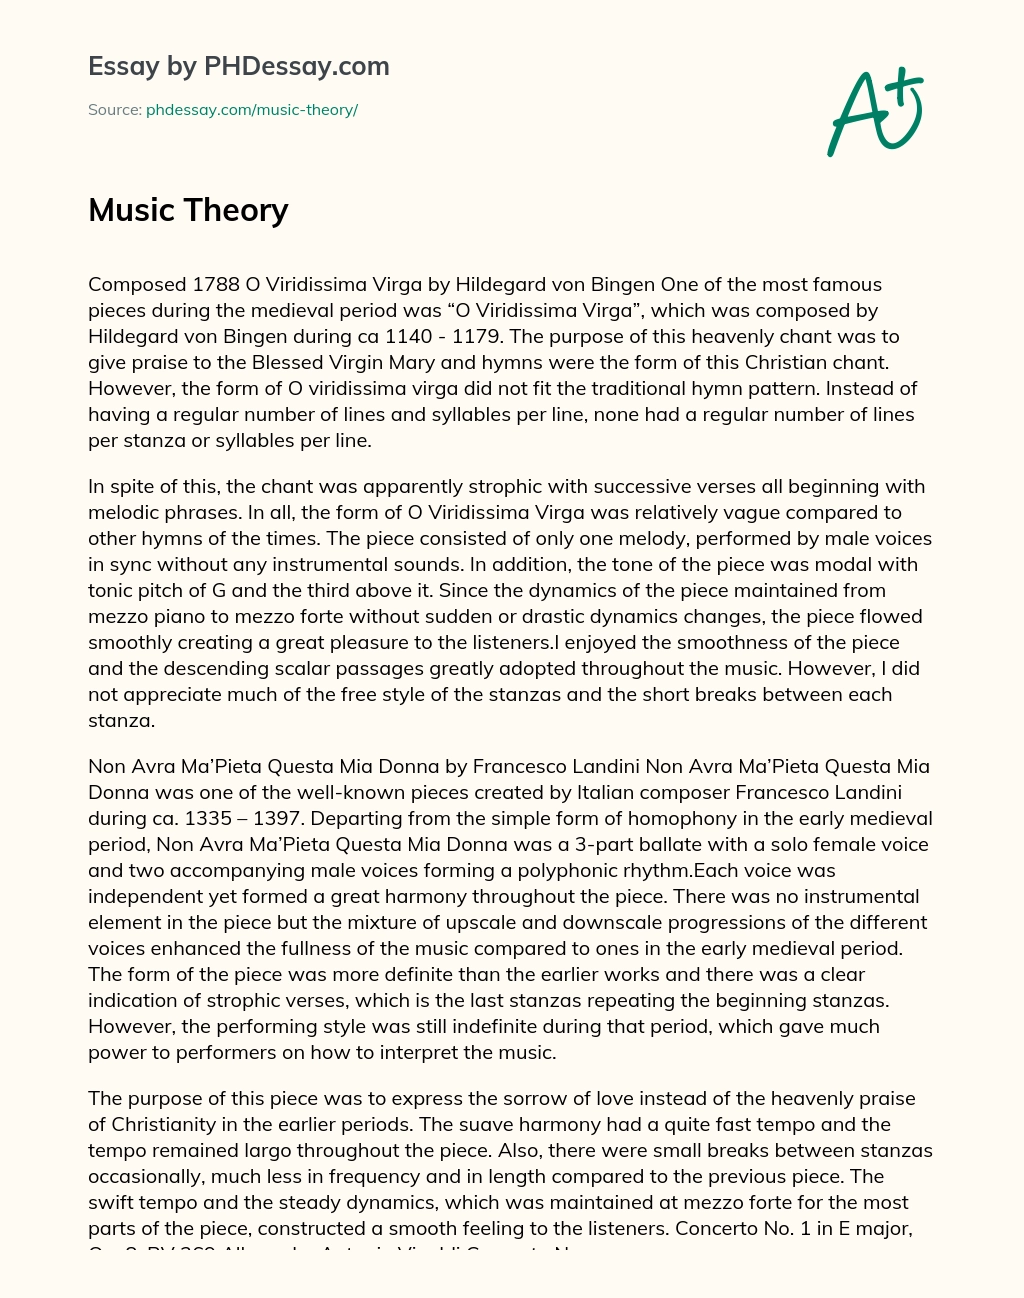 Music Theory essay